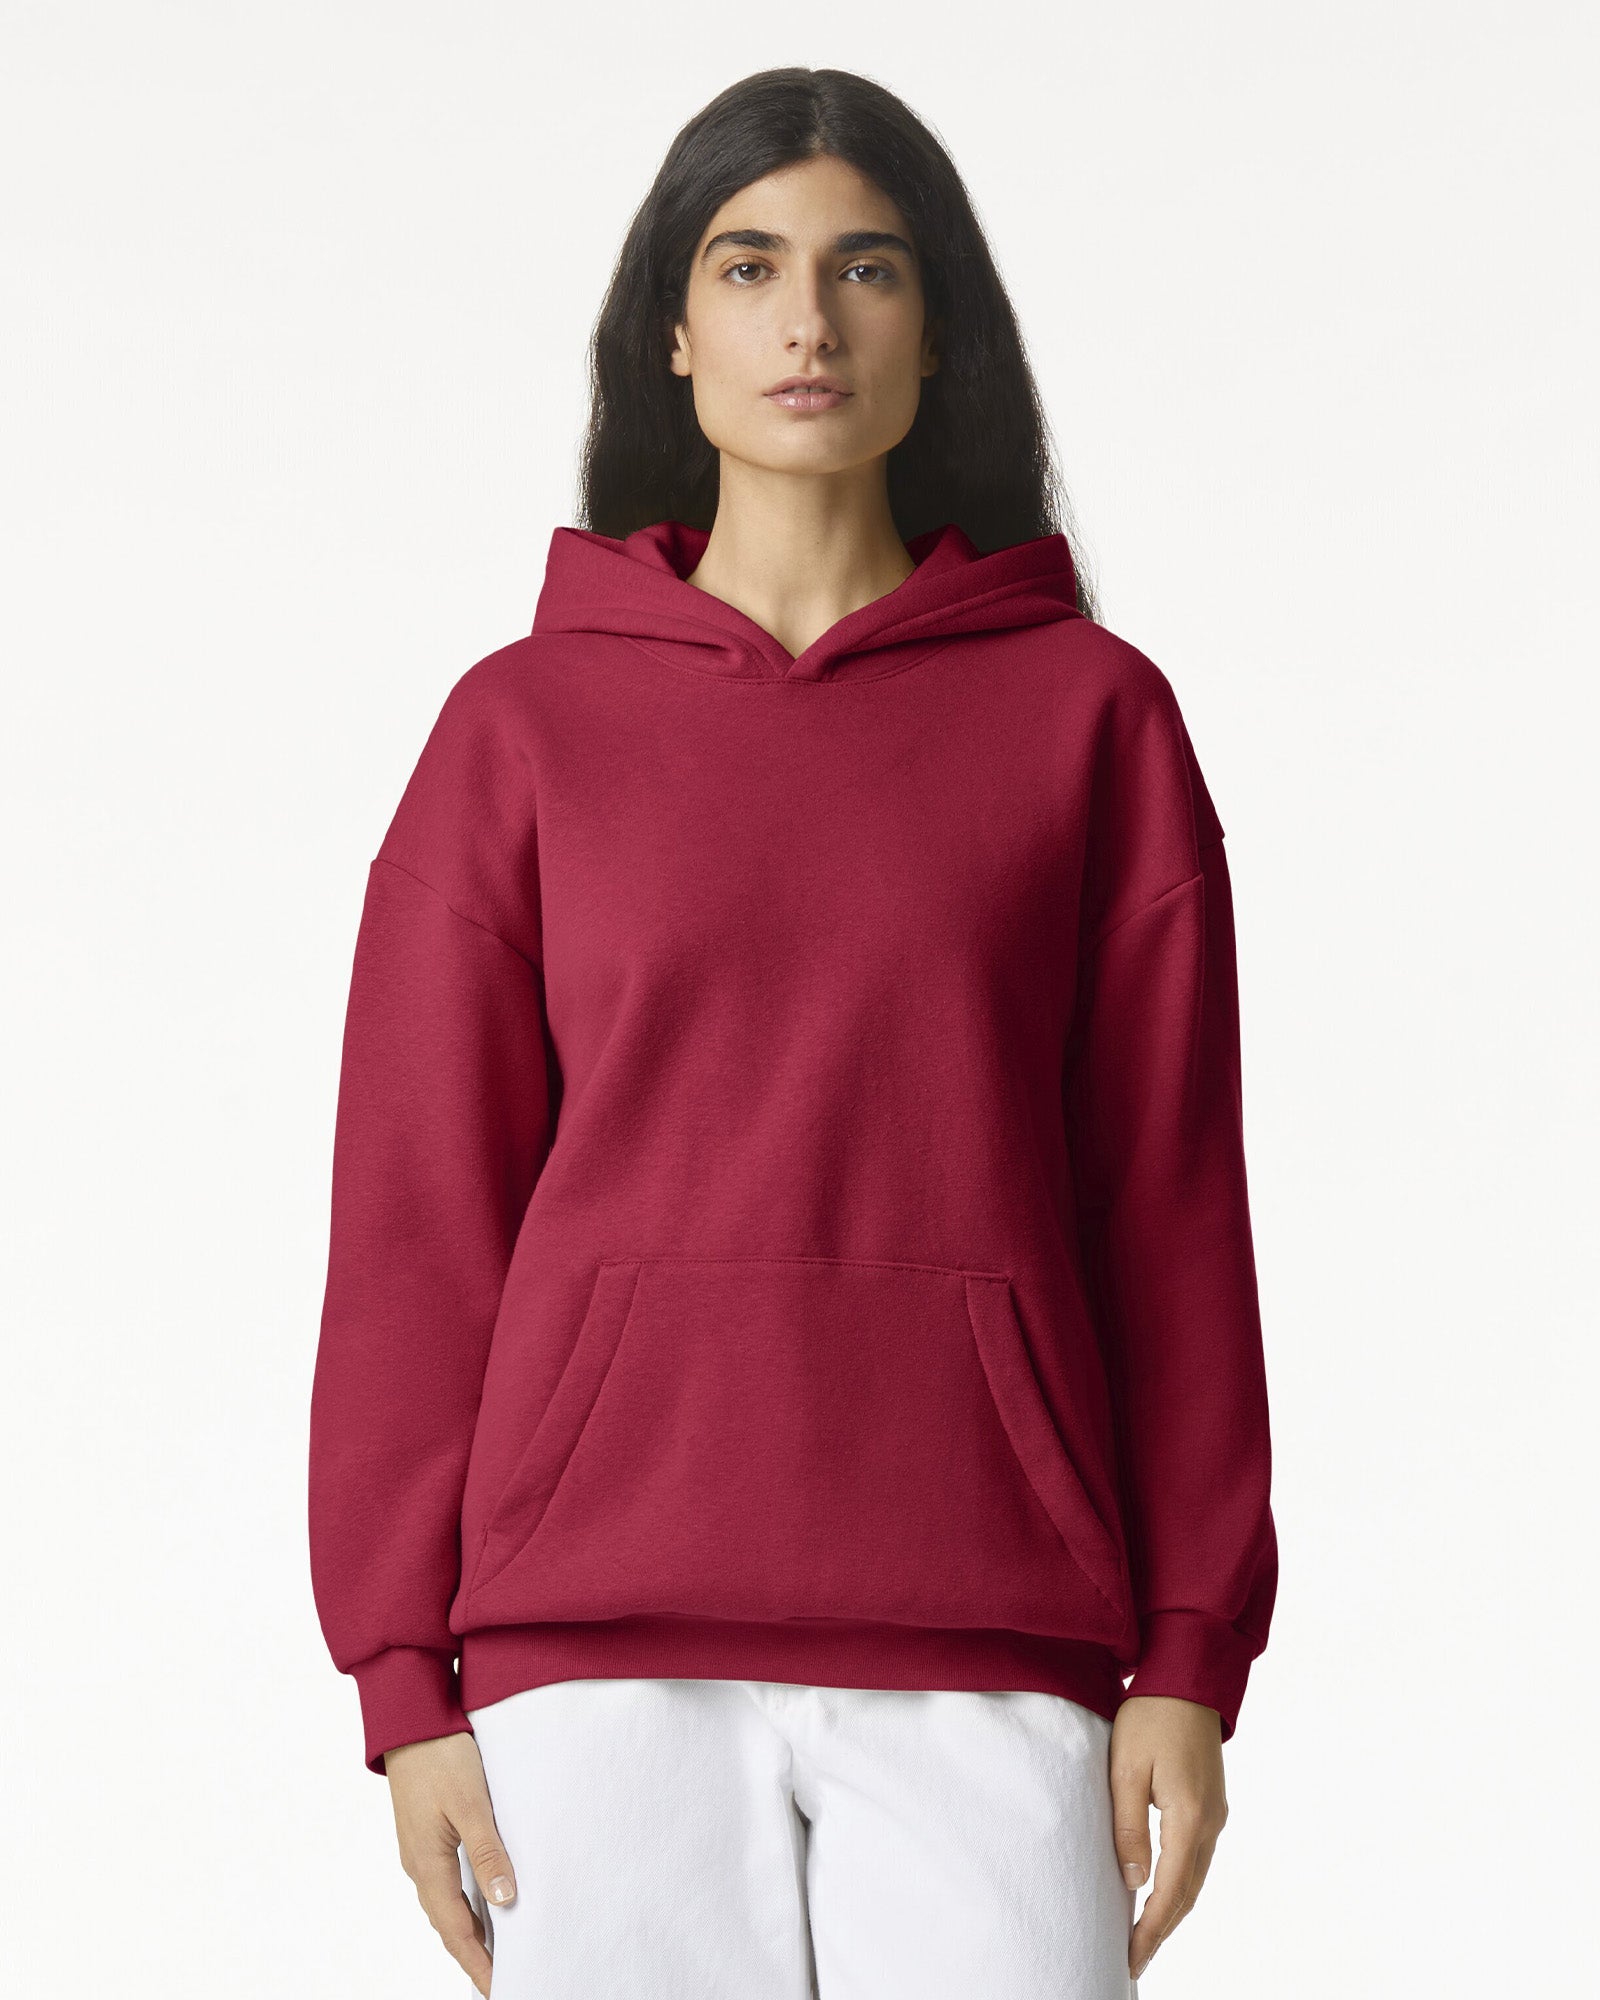 Reflex Unisex Hooded Sweatshirt